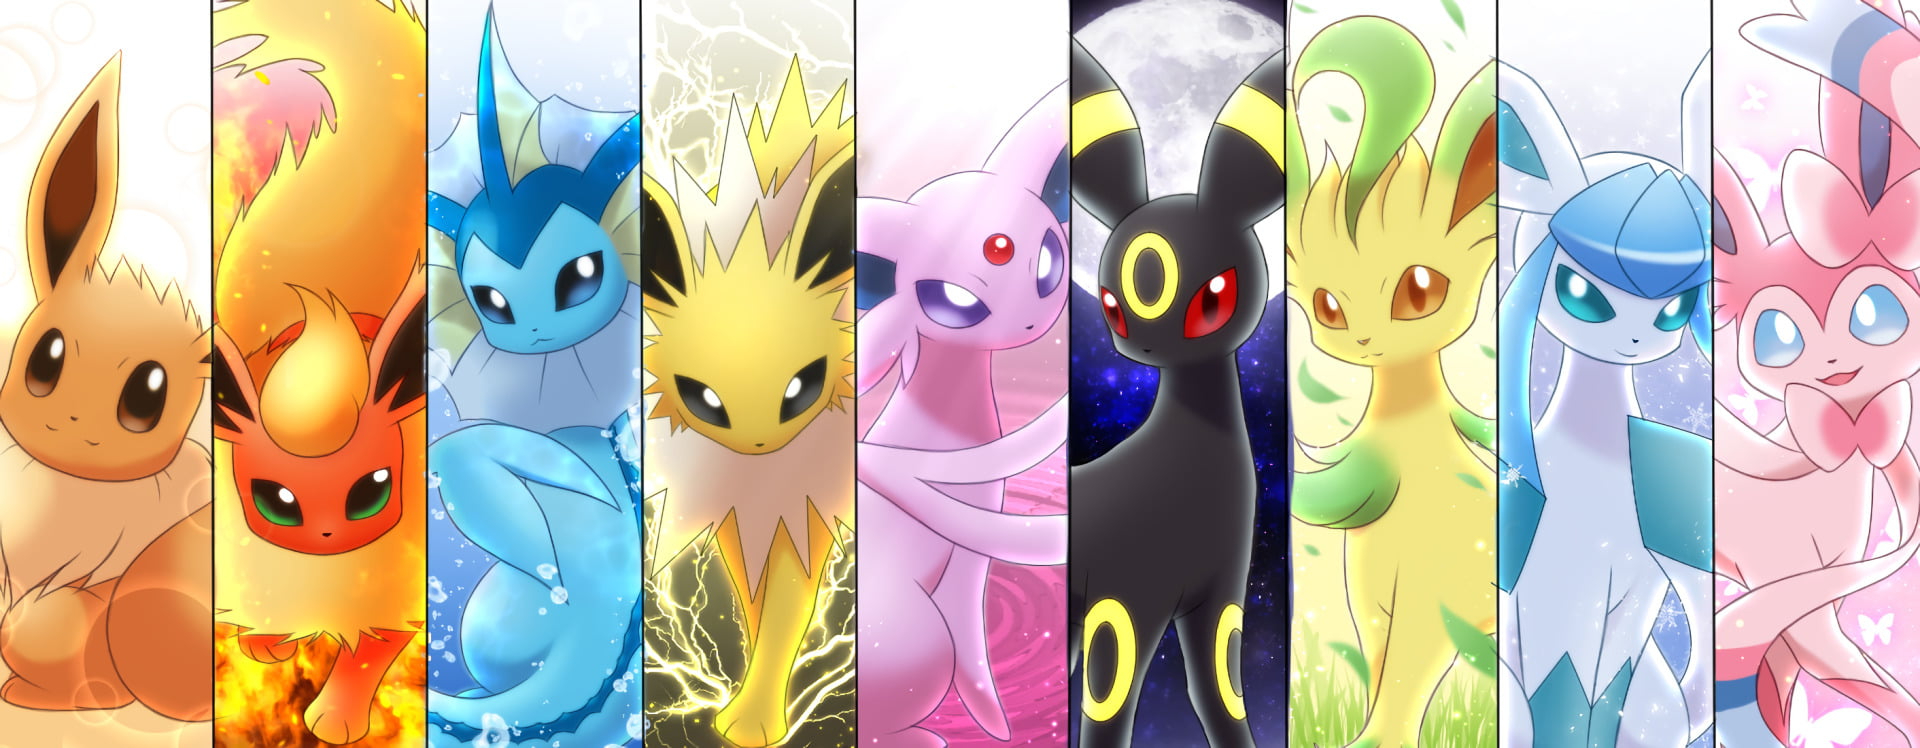 Wallpaper Pokemon Character Collage, Pokémon, Eevee Pokémon • Wallpaper For You HD Wallpaper For Desktop & Mobile